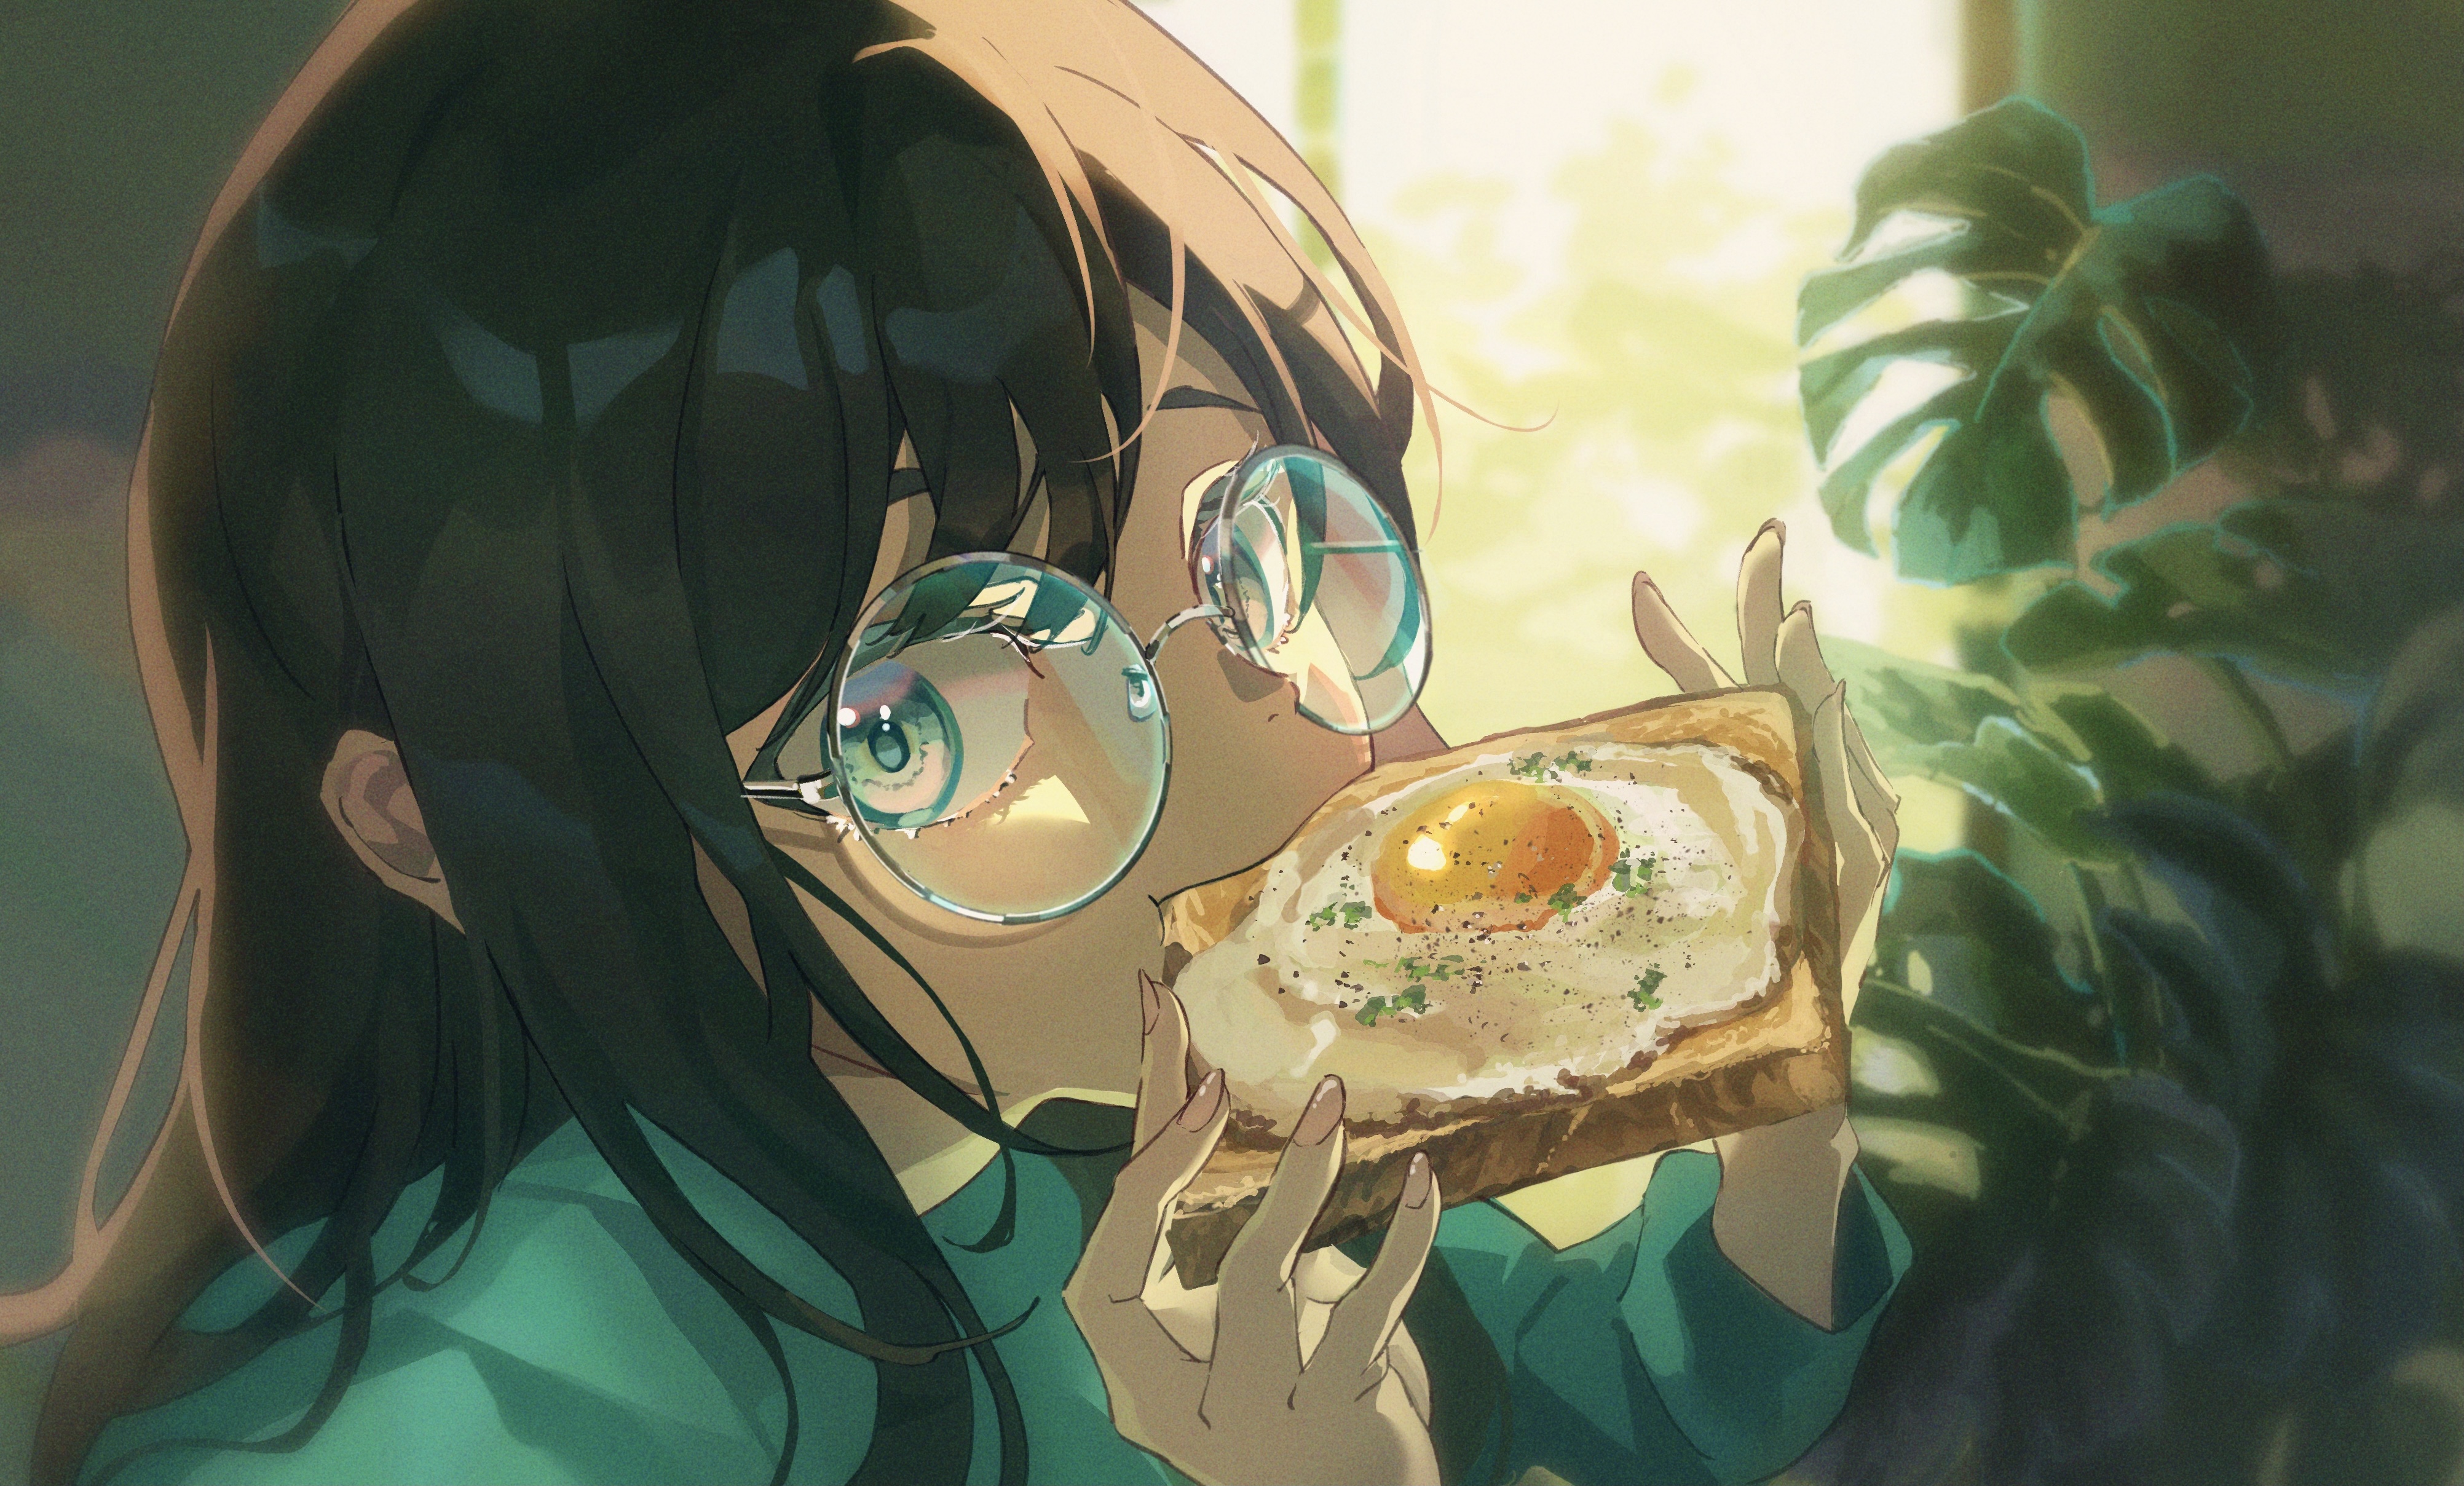 Anime 4008x2417 anime anime girls digital art artwork Pixiv looking at viewer 2D anime girls eating toasts eggs leaves glasses